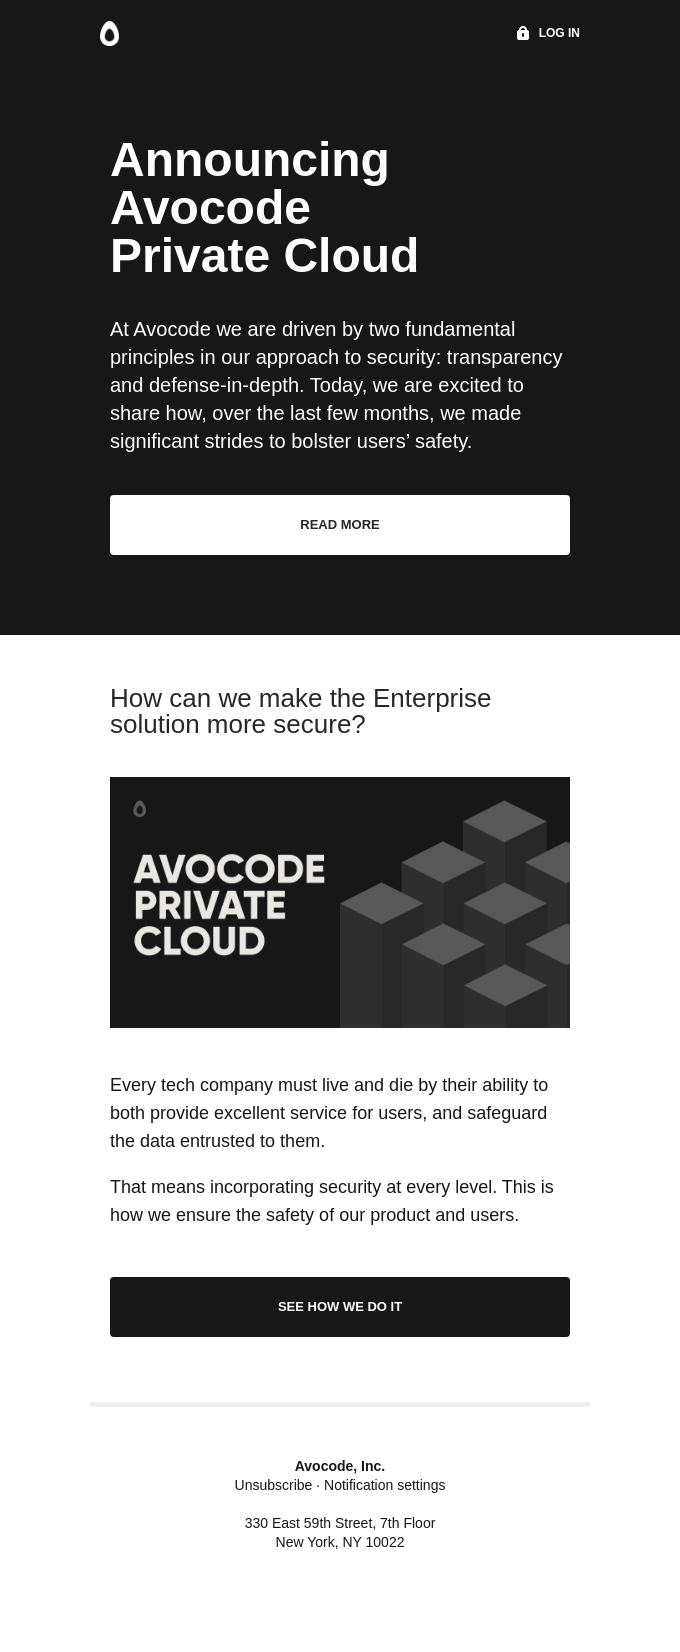 Announcing Avocode Private Cloud